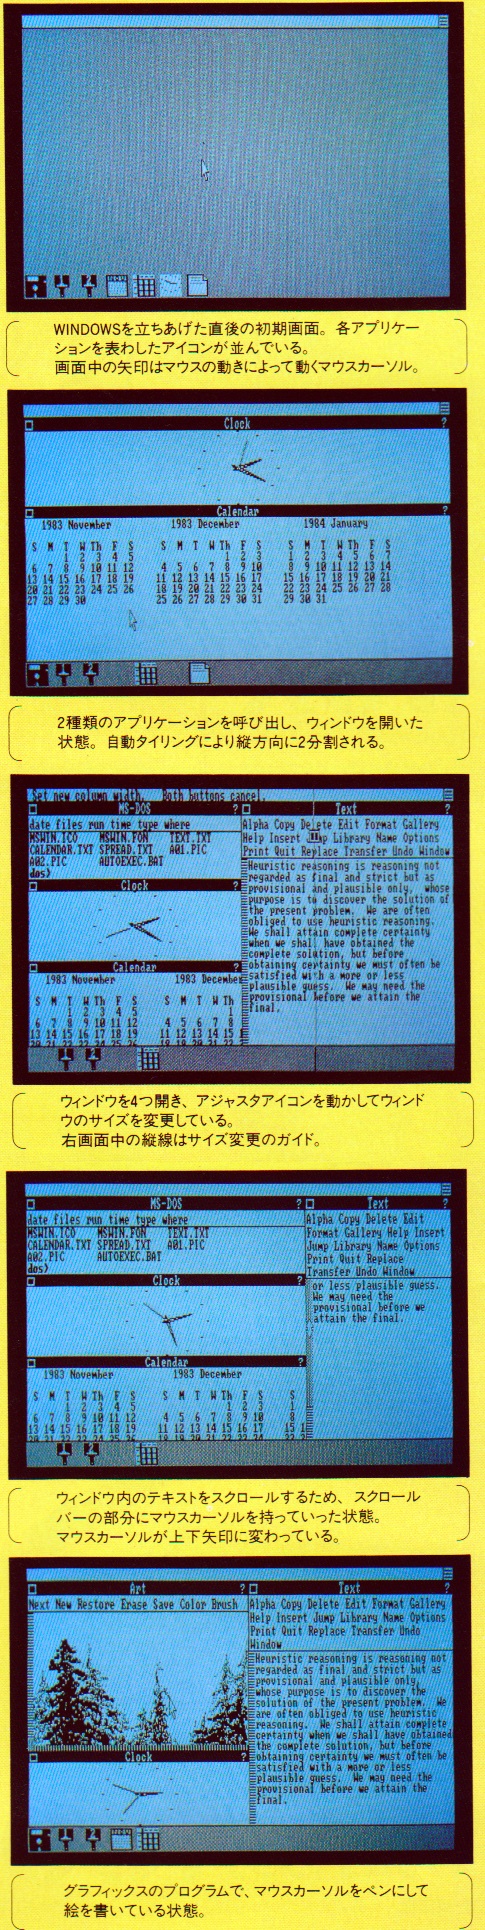 ASCII1984(06)scan15WindowsW485.jpg